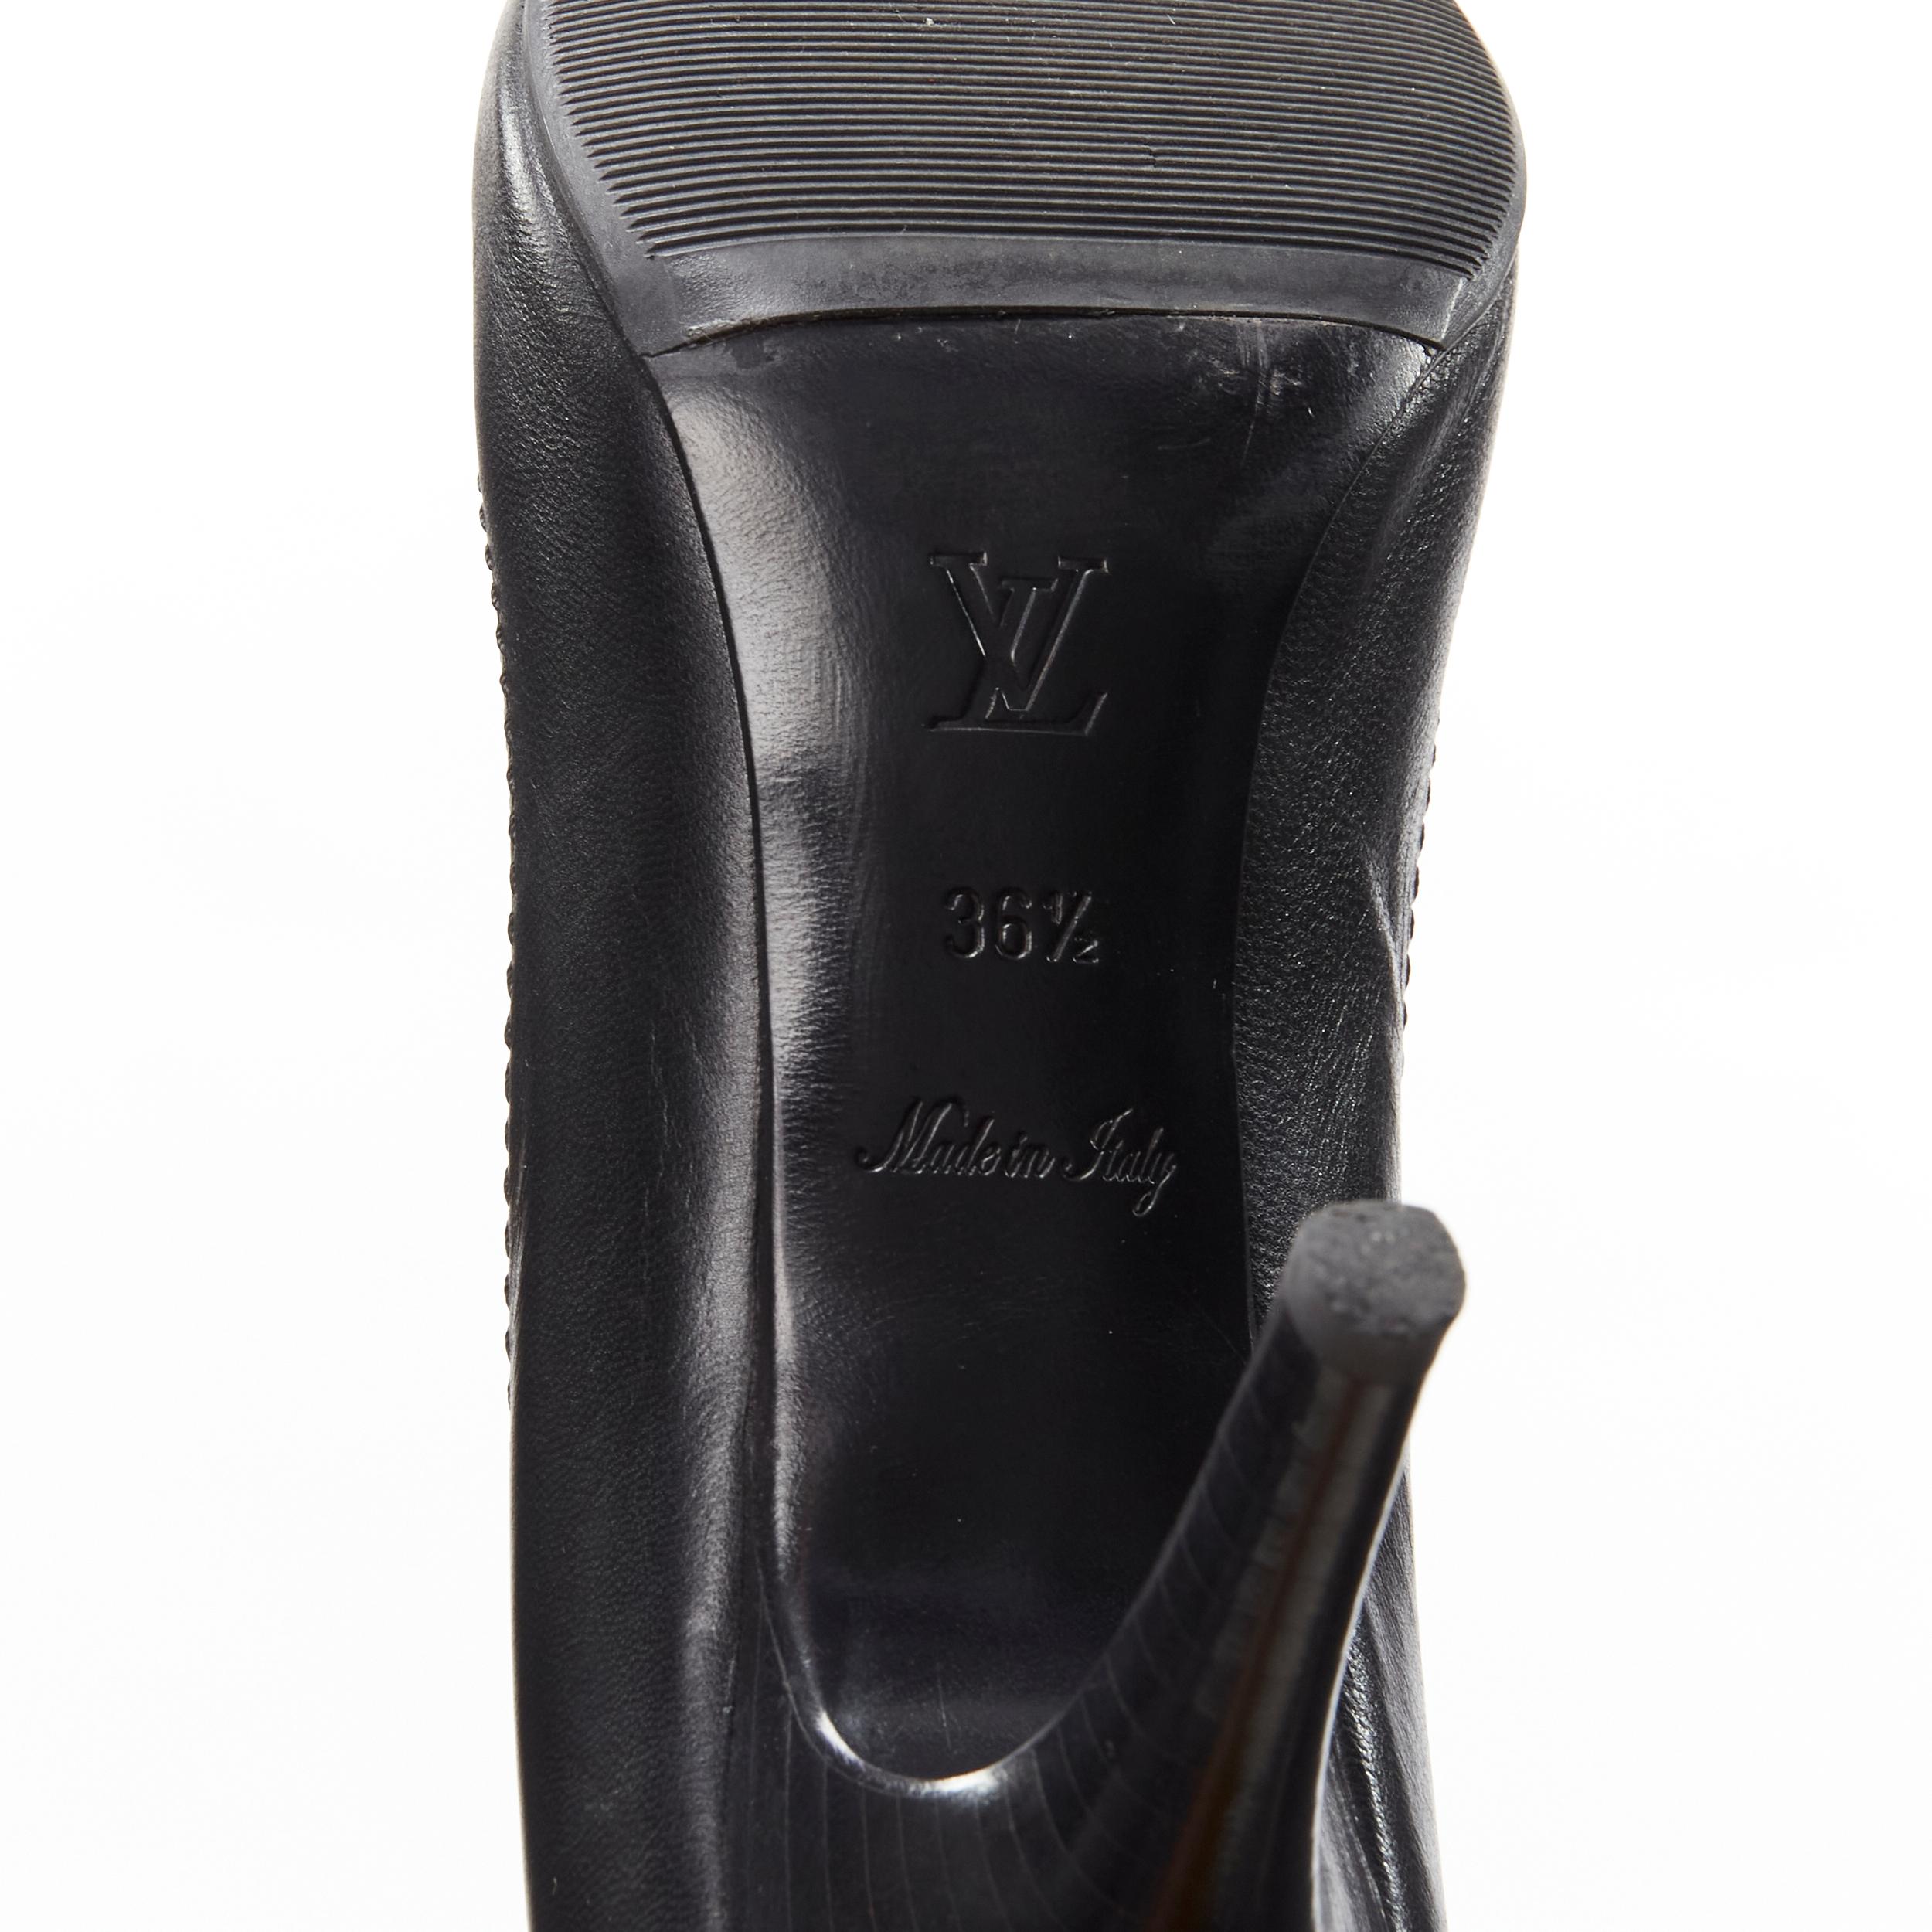 LOUIS VUITTON gold LV dice charm black leather mid heel pump EU36.5 For Sale 4